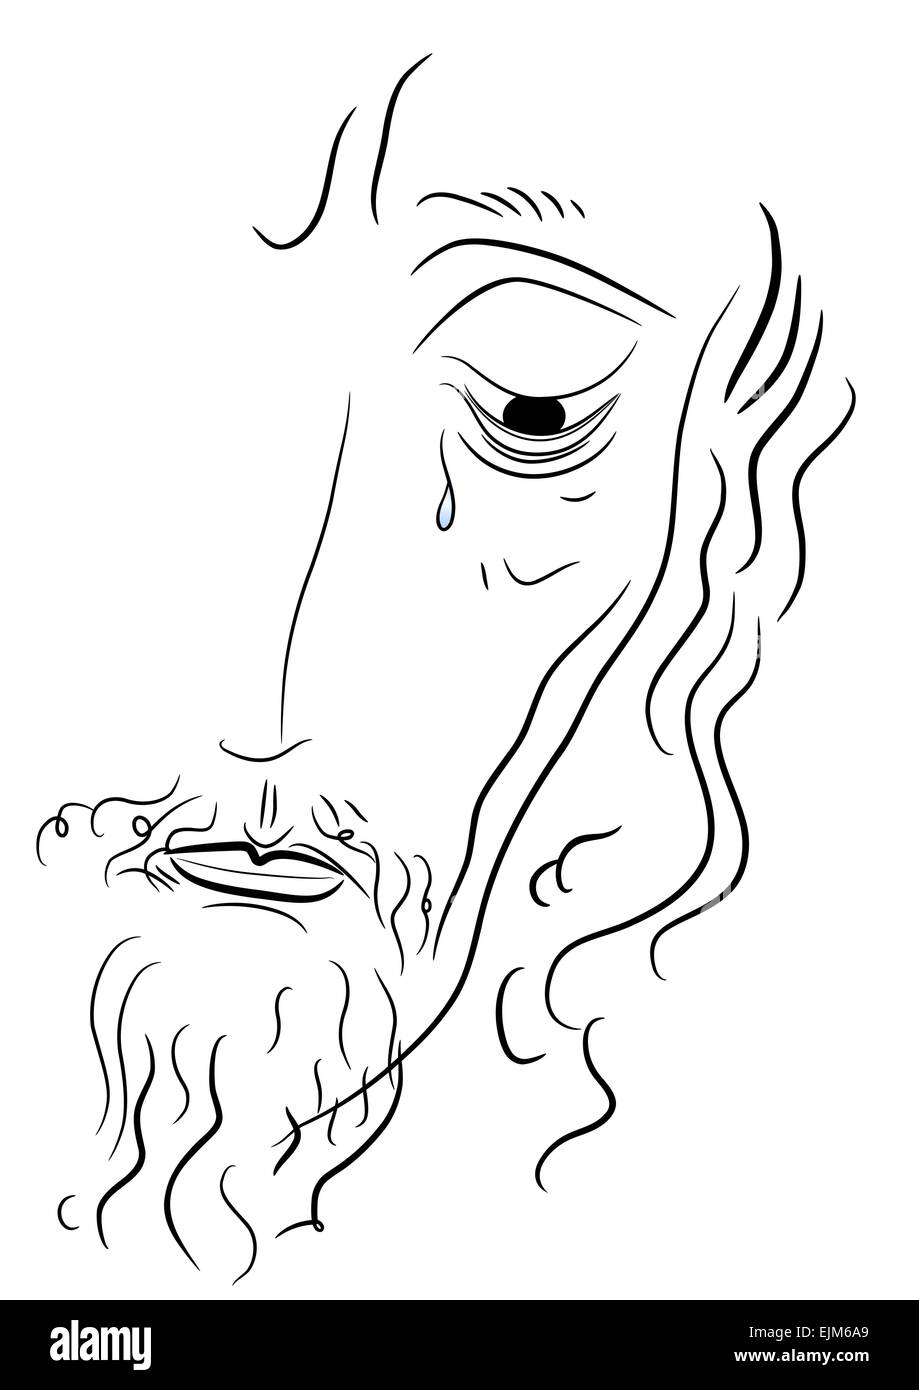 Illustration of the Jesus Christ - vector Stock Vector